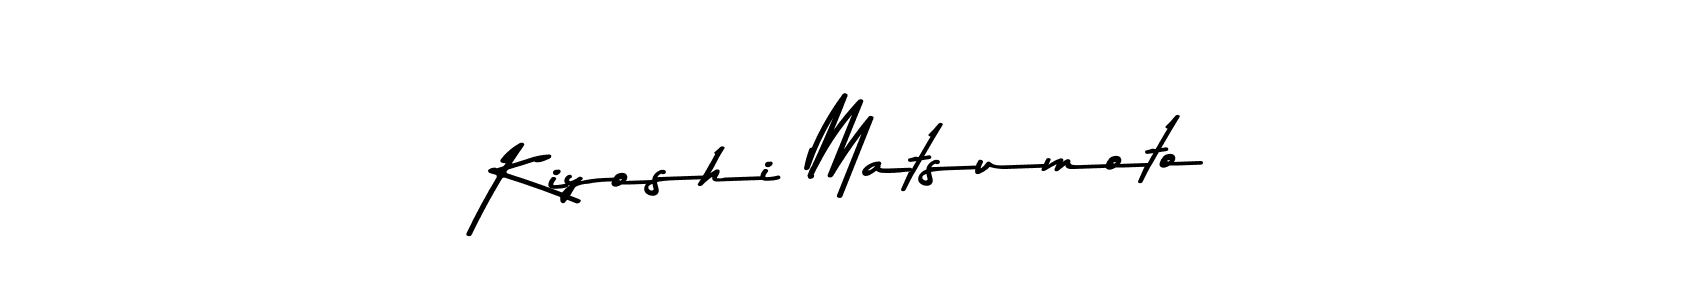 How to Draw Kiyoshi Matsumoto signature style? Asem Kandis PERSONAL USE is a latest design signature styles for name Kiyoshi Matsumoto. Kiyoshi Matsumoto signature style 9 images and pictures png